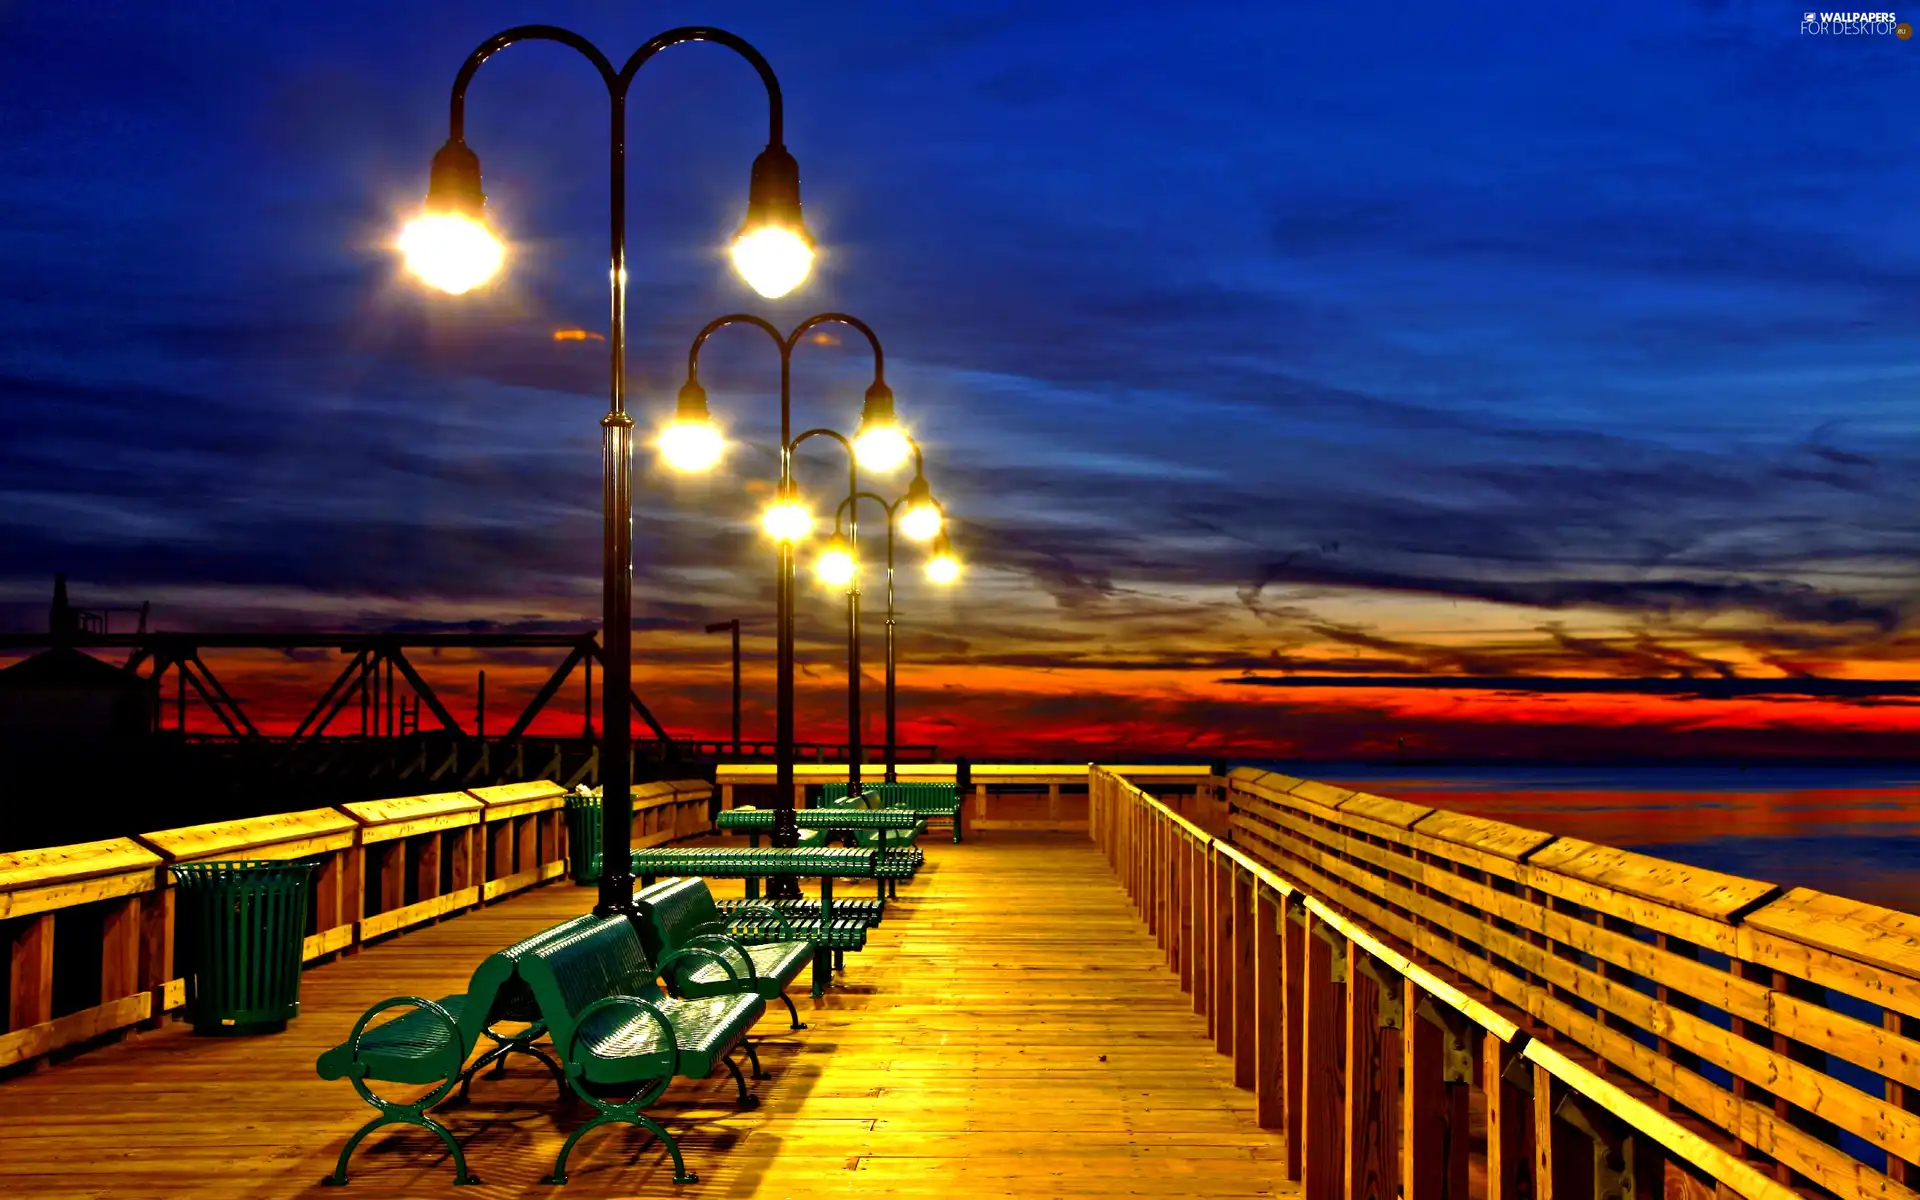 pier, illuminated, Lamps, bench